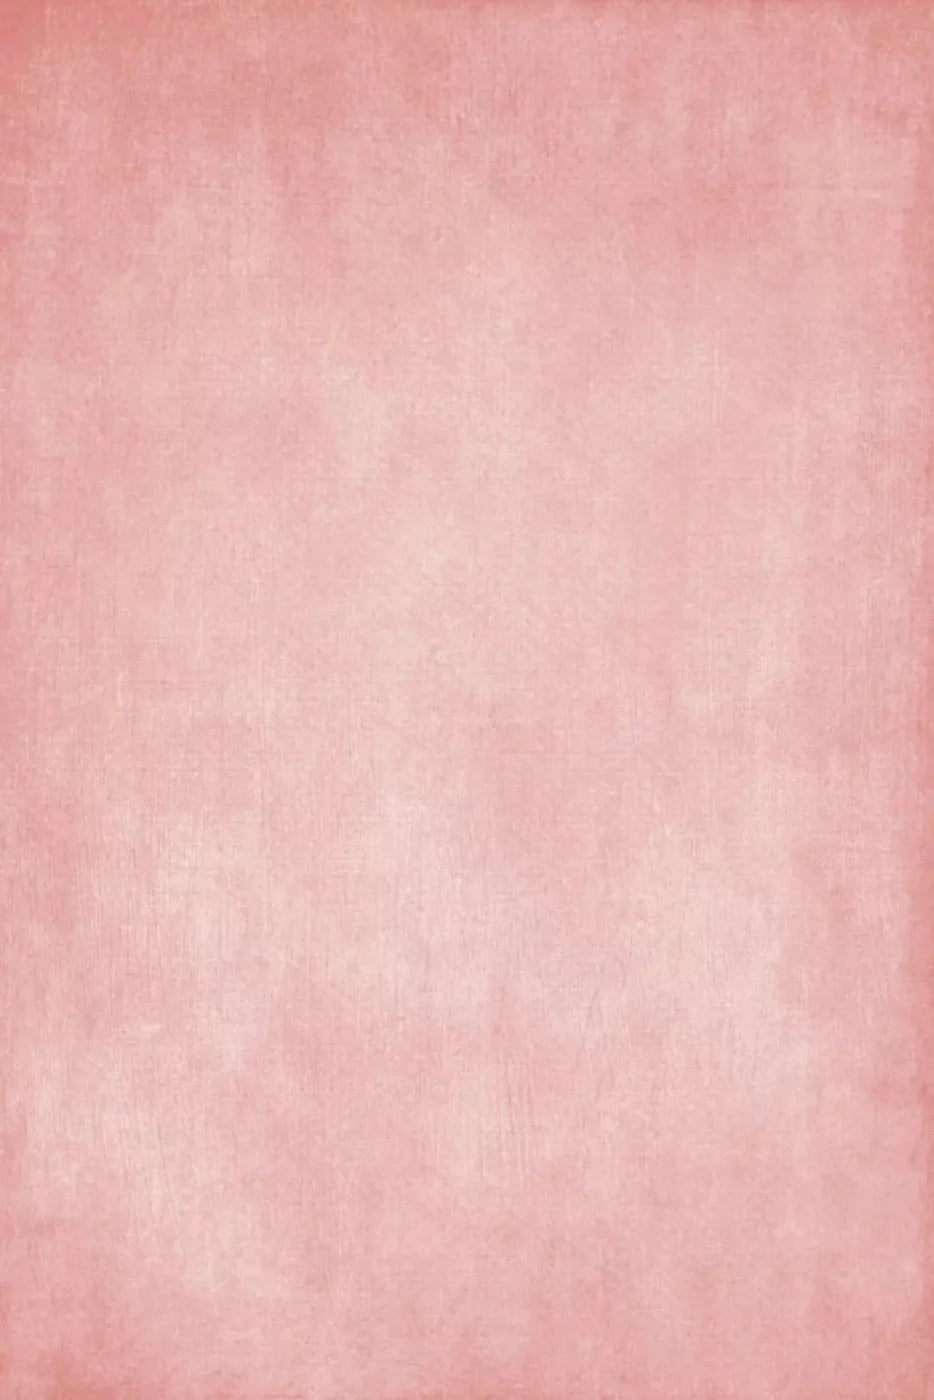 Daydream Pink Backdrop